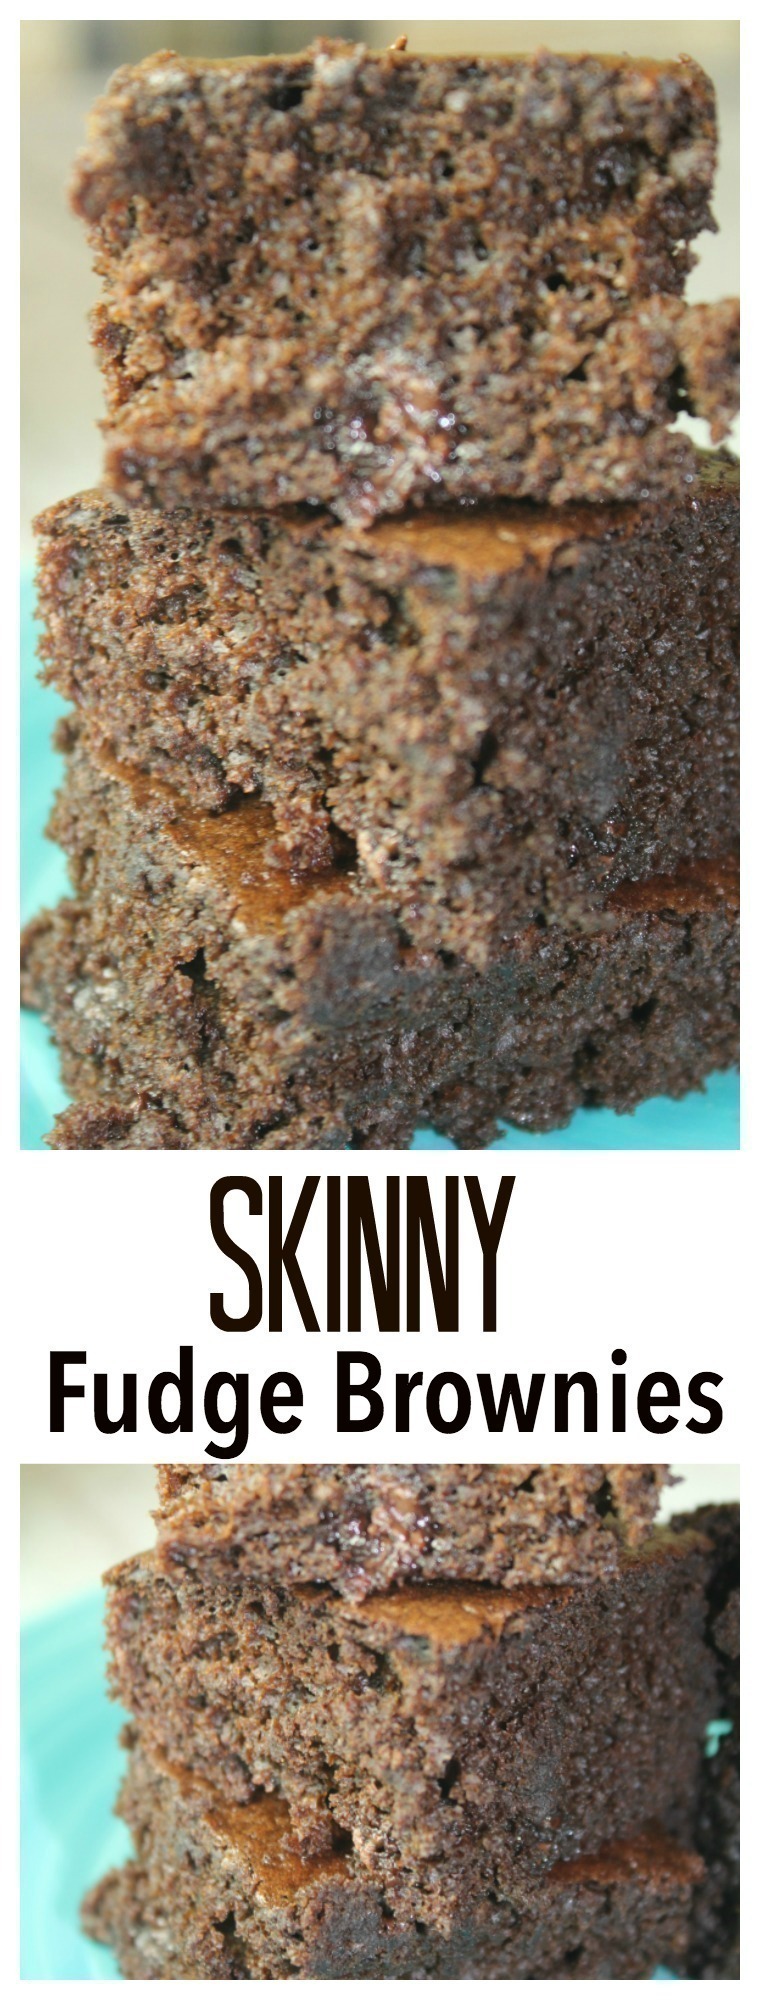 Skinny Fudge Brownies